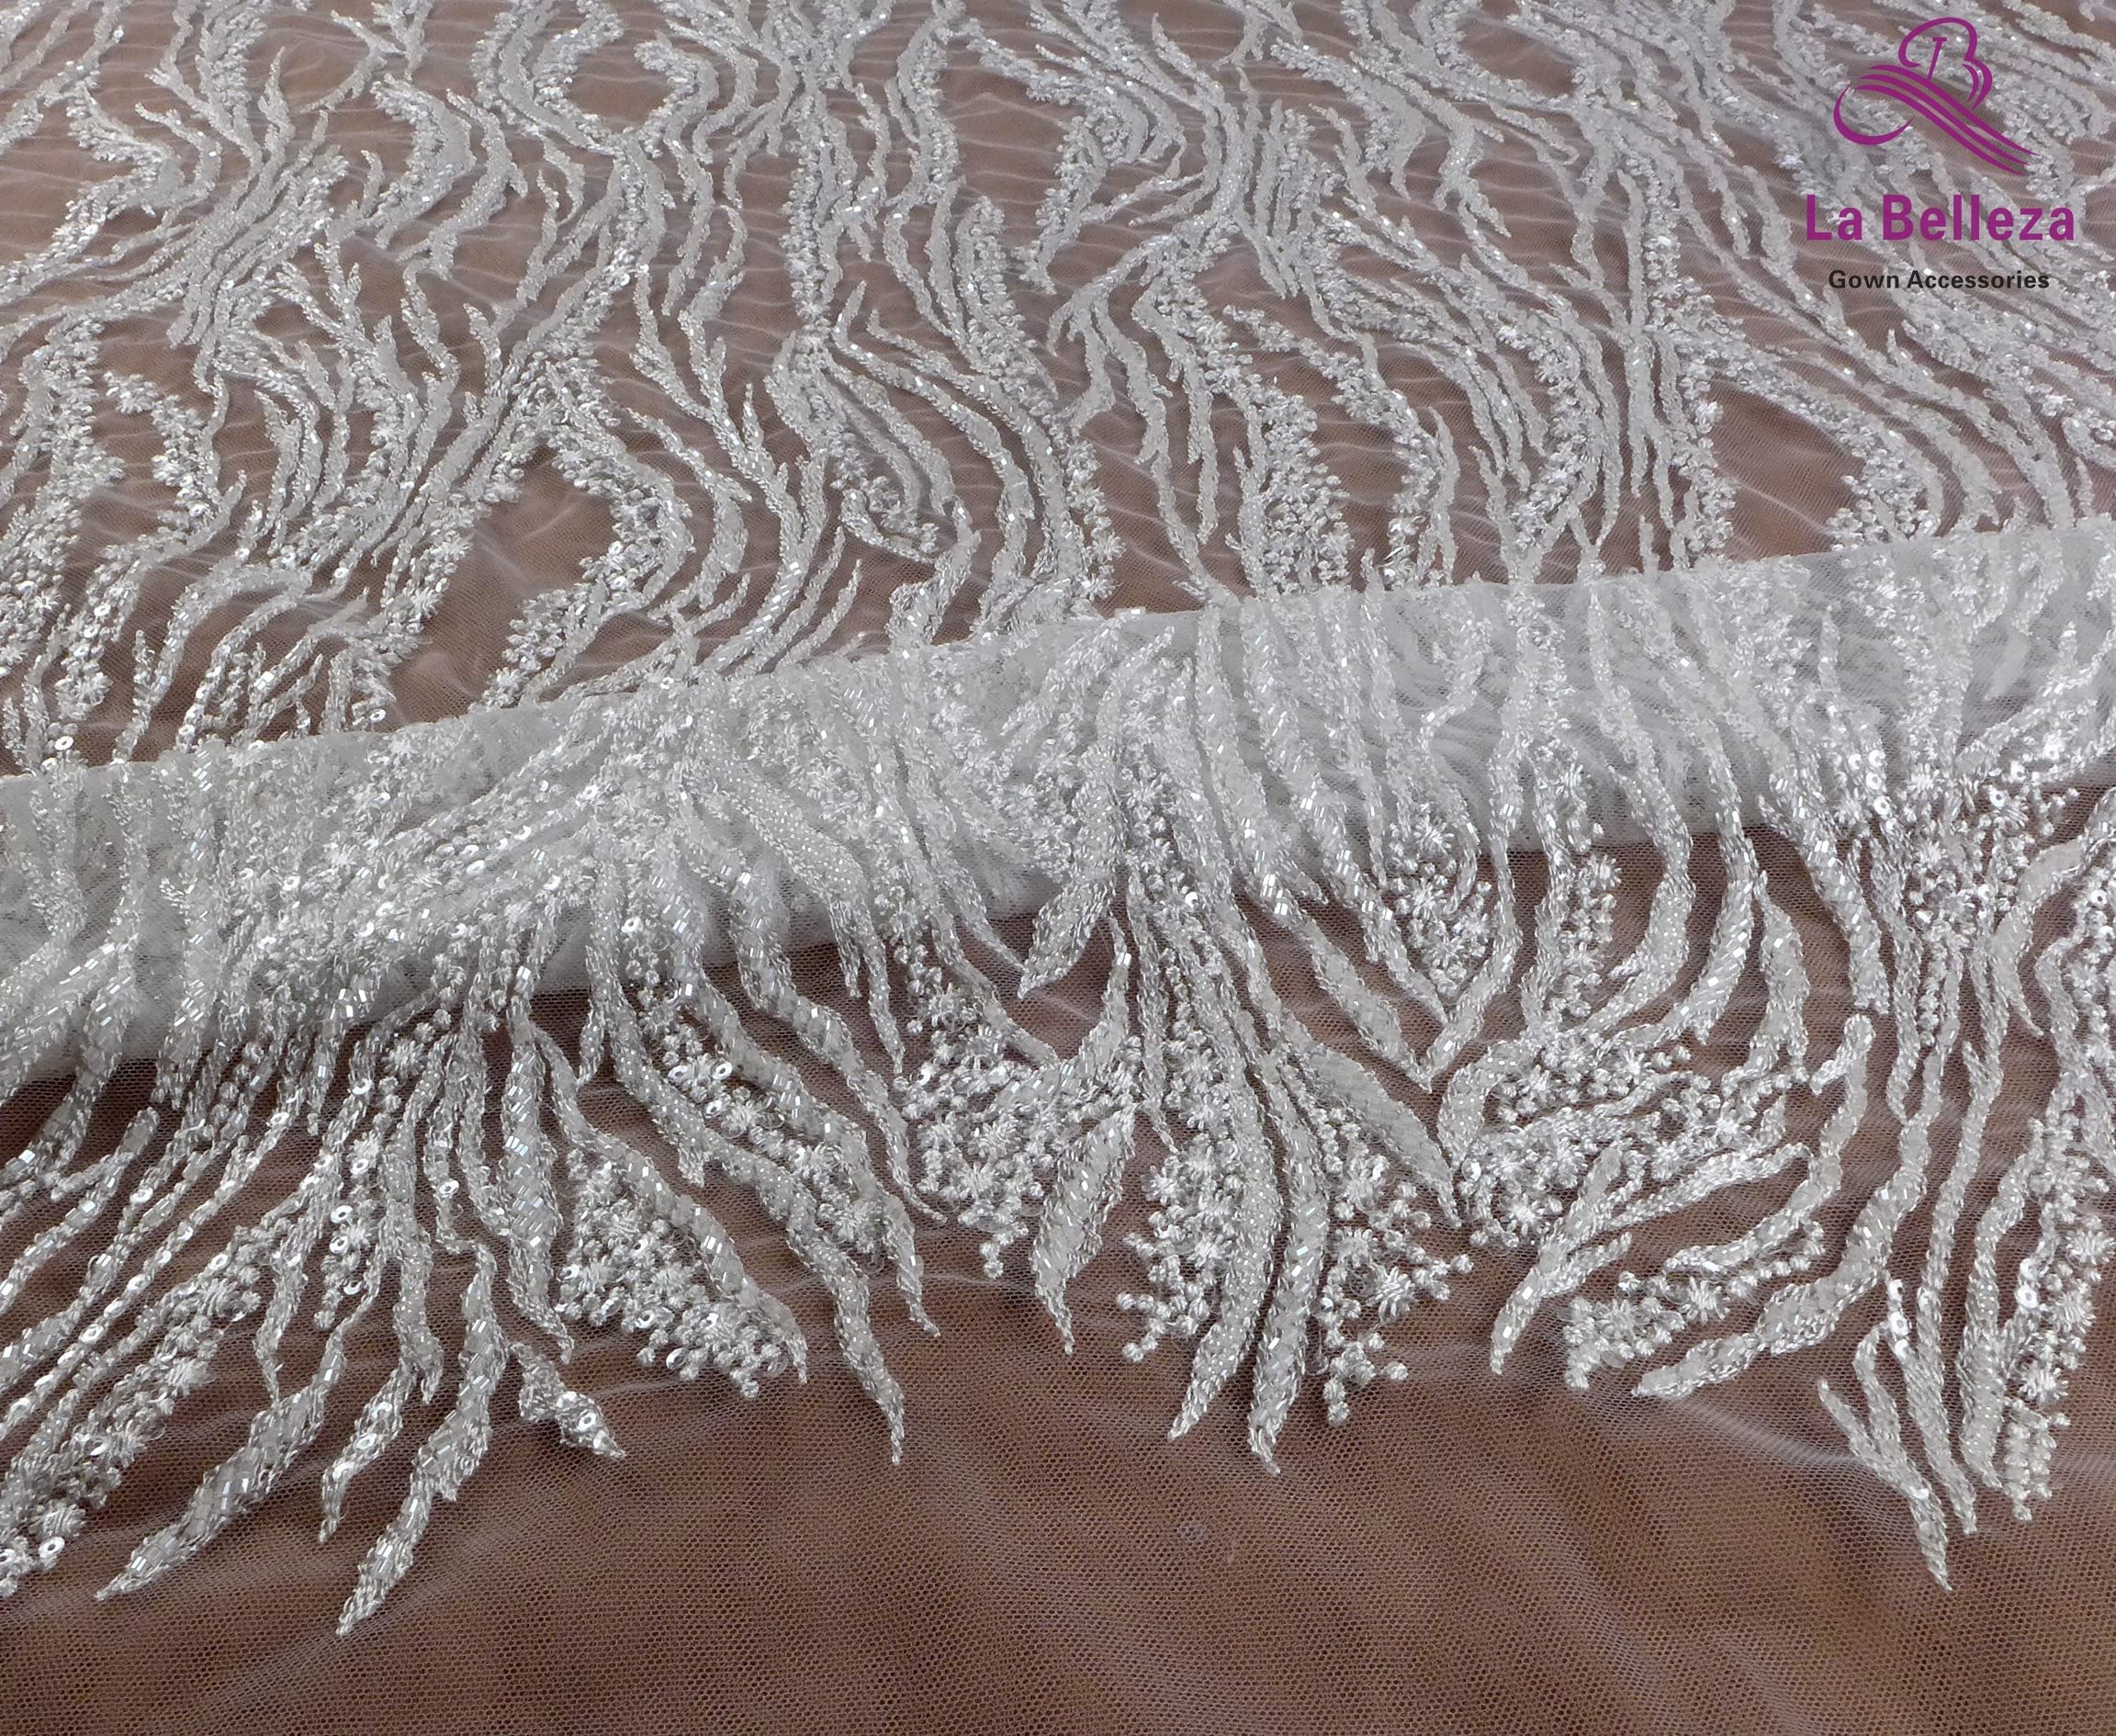 Popular La Belleza Beaded lace Fabric 51 Width Simple Irregular Curve Easy Cut for Wedding Dress or Cloth lace Fabric 2 Yard